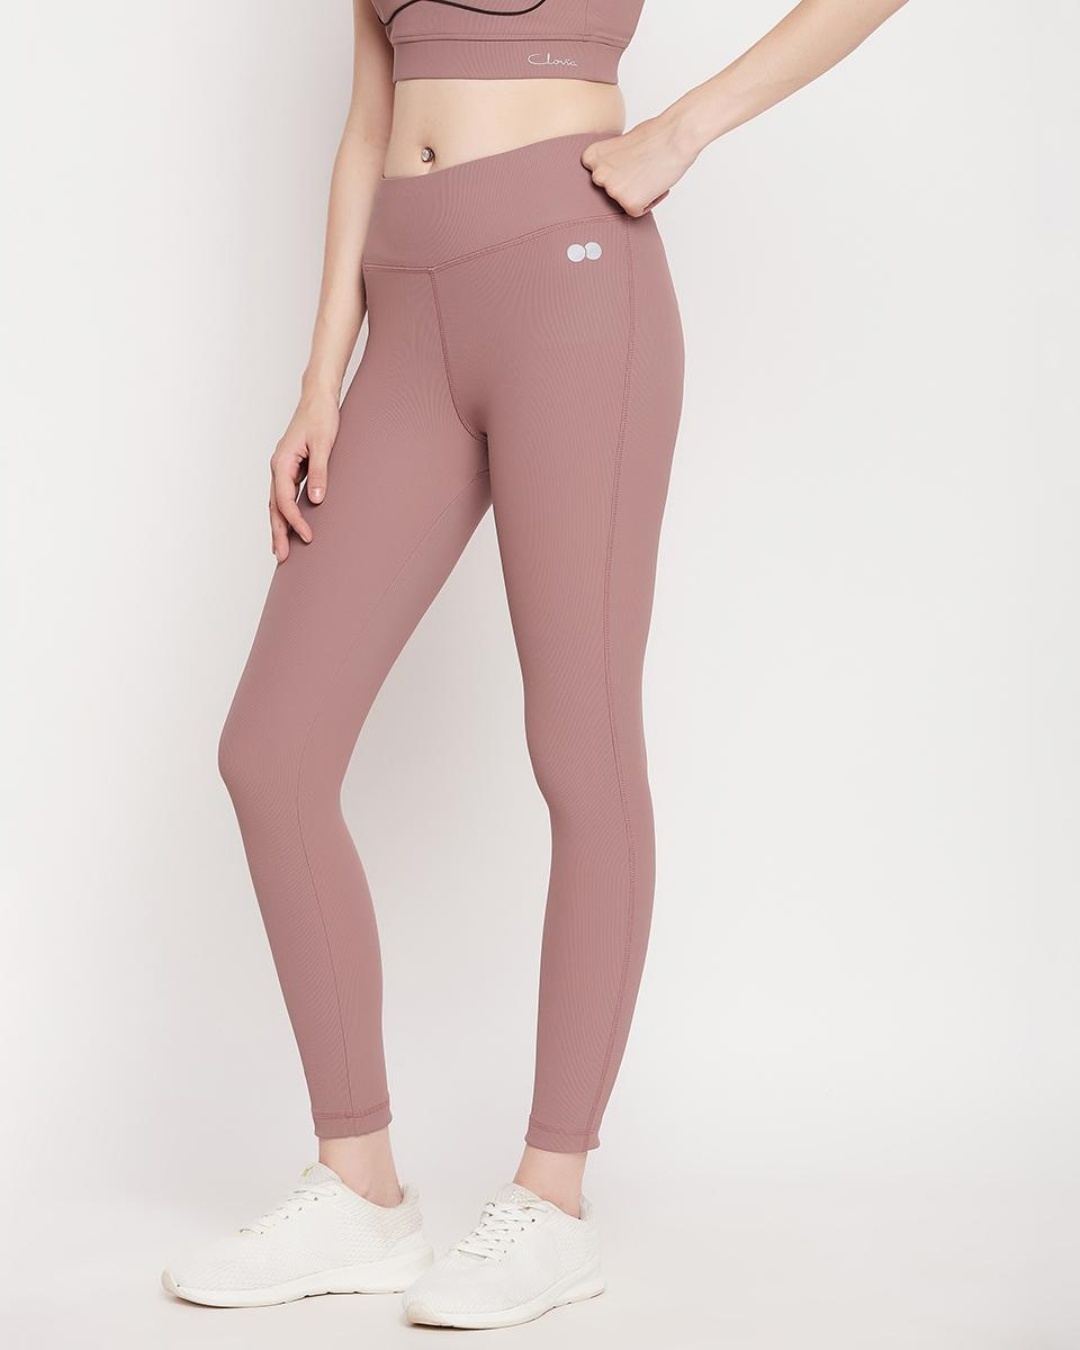 Shop Women's Pink Slim Fit Tights-Back